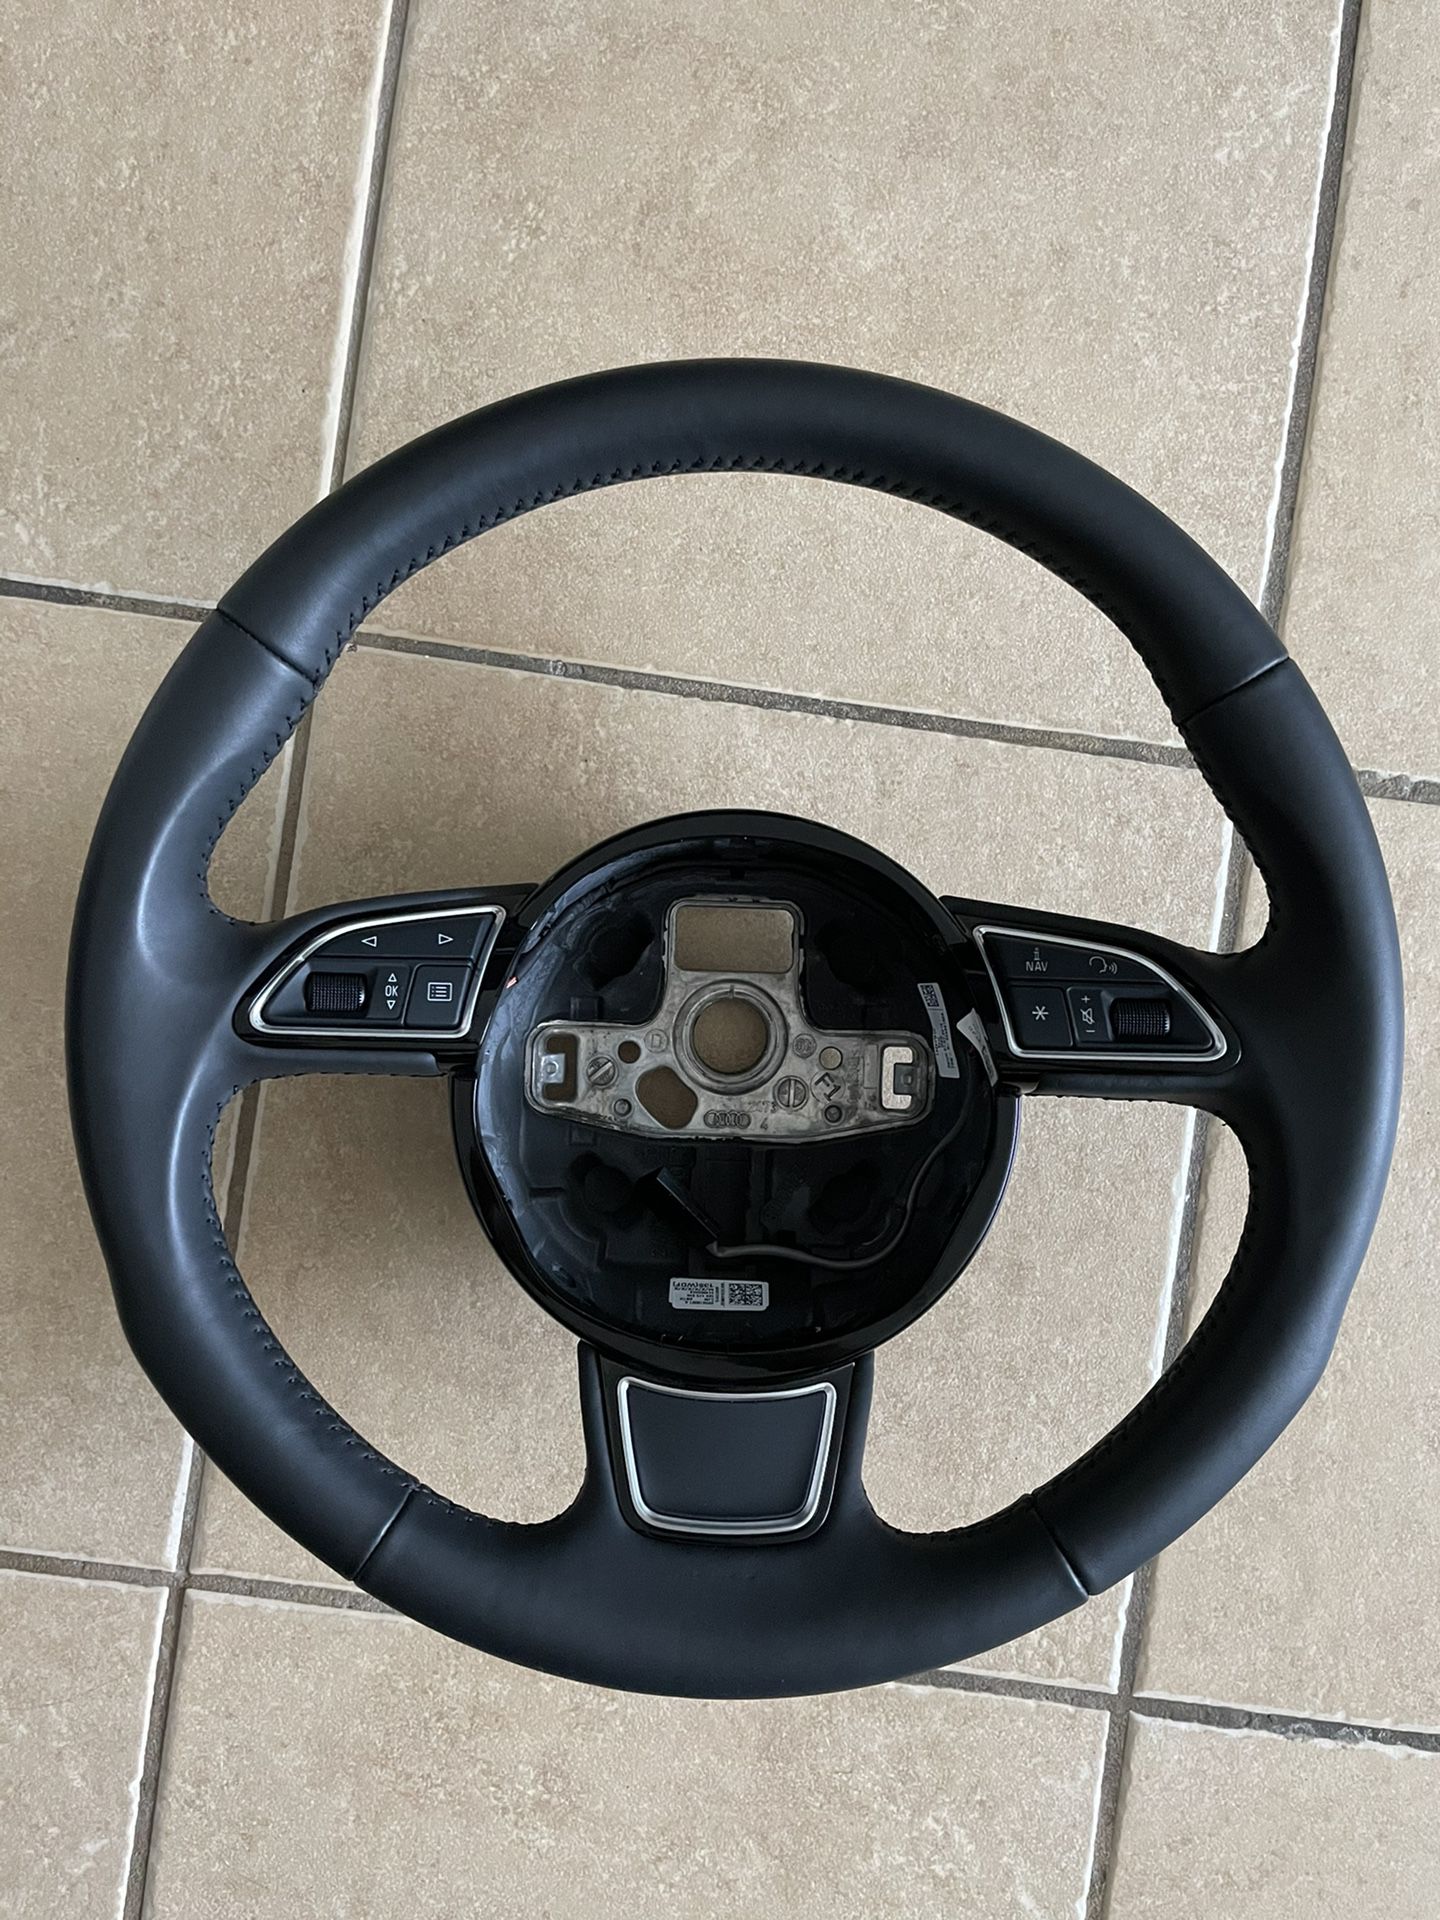 Audi A4 Steering Wheel-New 